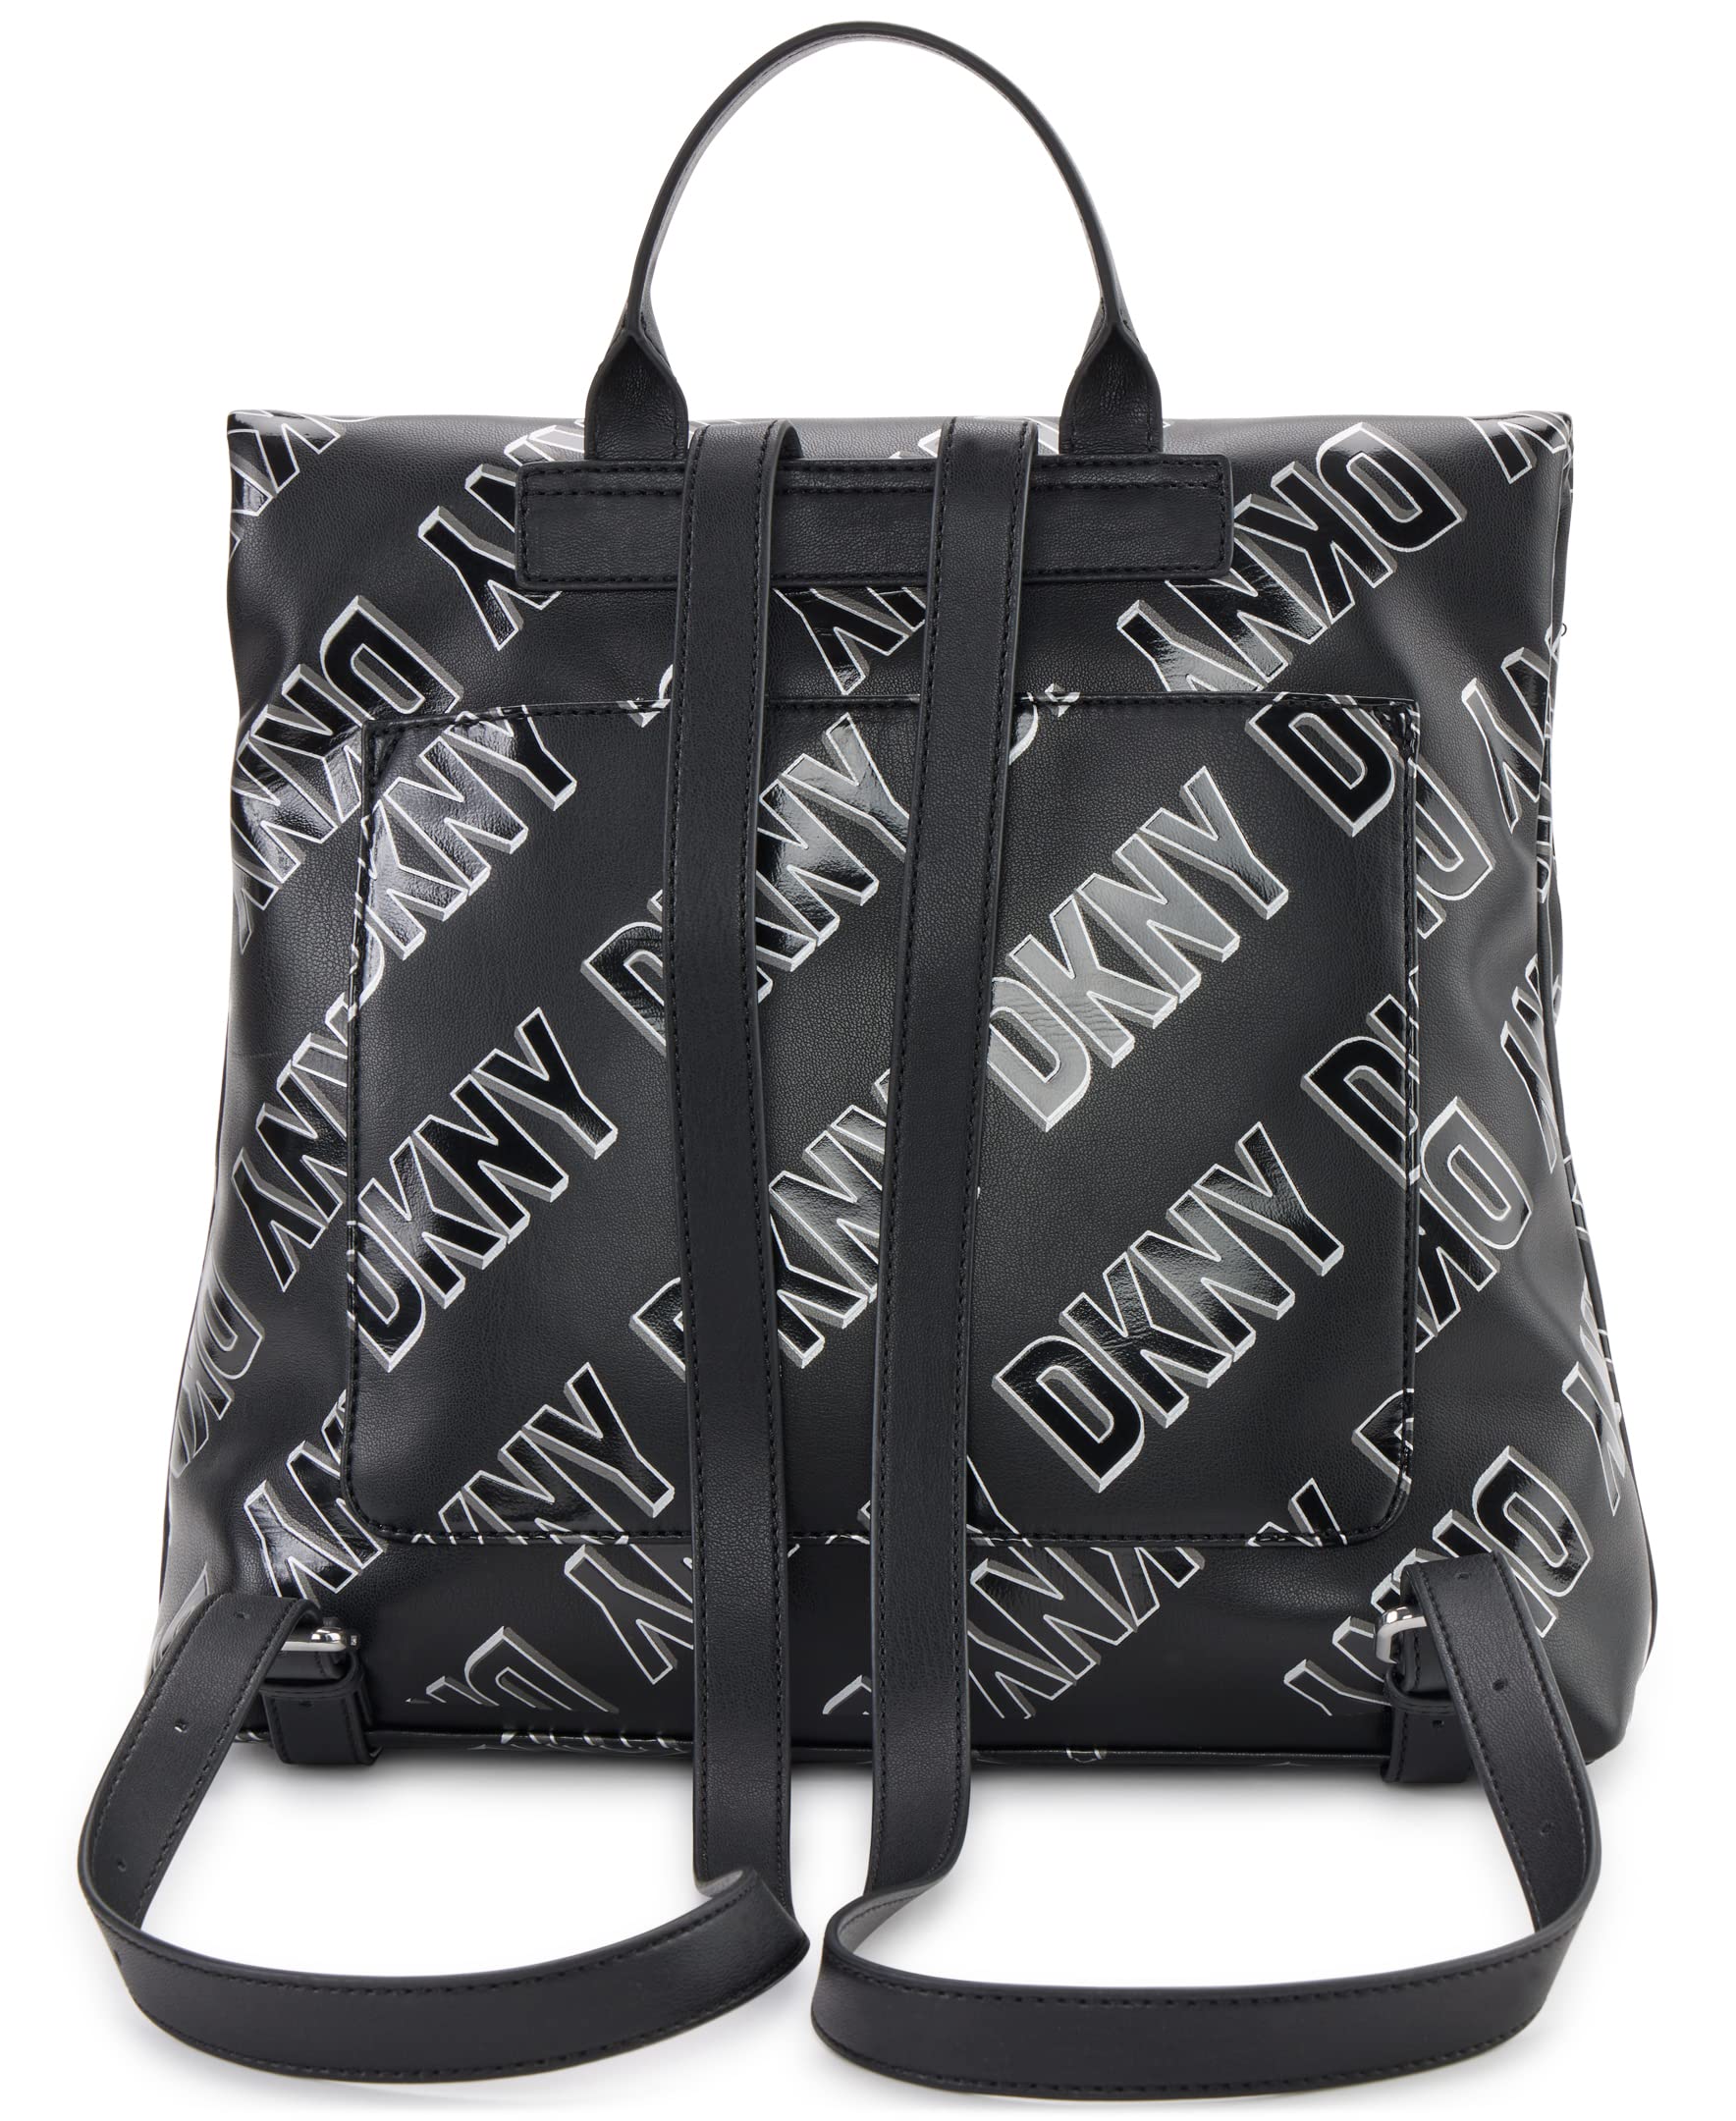 DKNY Tilly Backpack, BLK/WHT